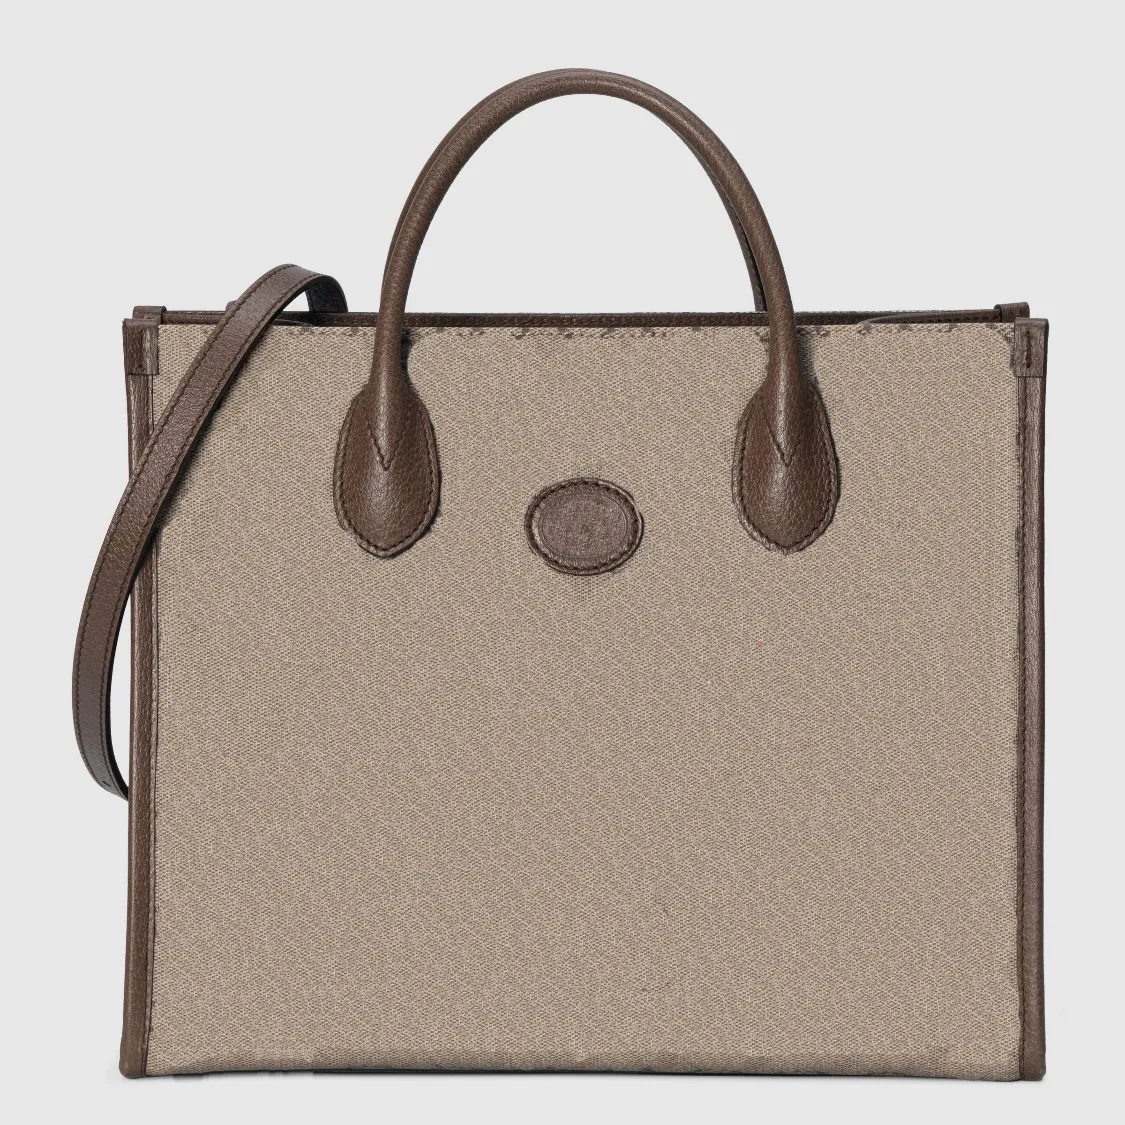 2021 Fashion womens trend totes bags top lady bag embossed printing logo design high-end large capacity high quality handbag purse 648134